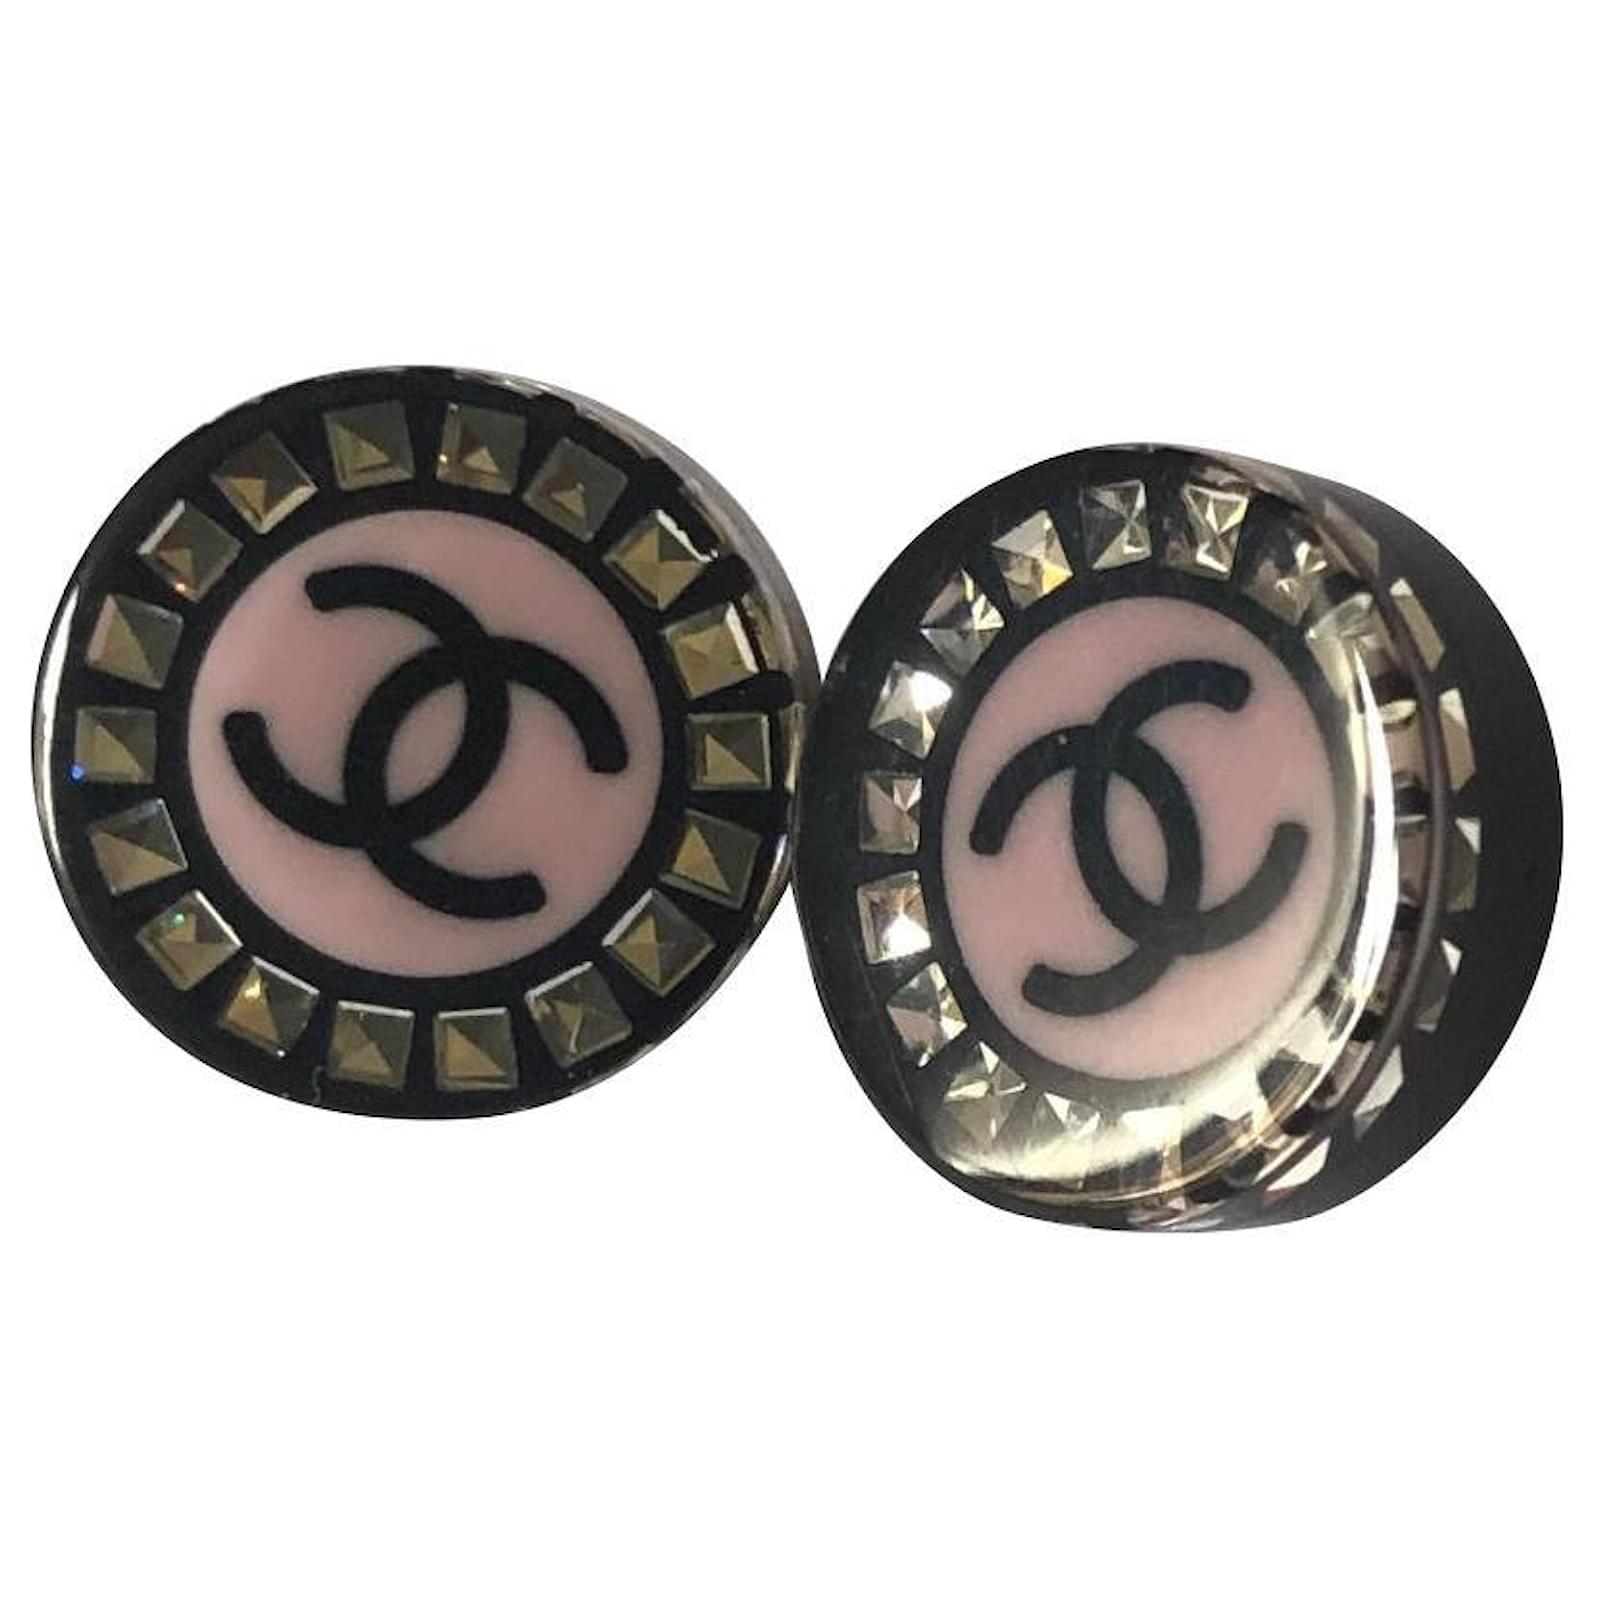 CHANEL, Jewelry, Chanel Pink Resin Cc Earrings